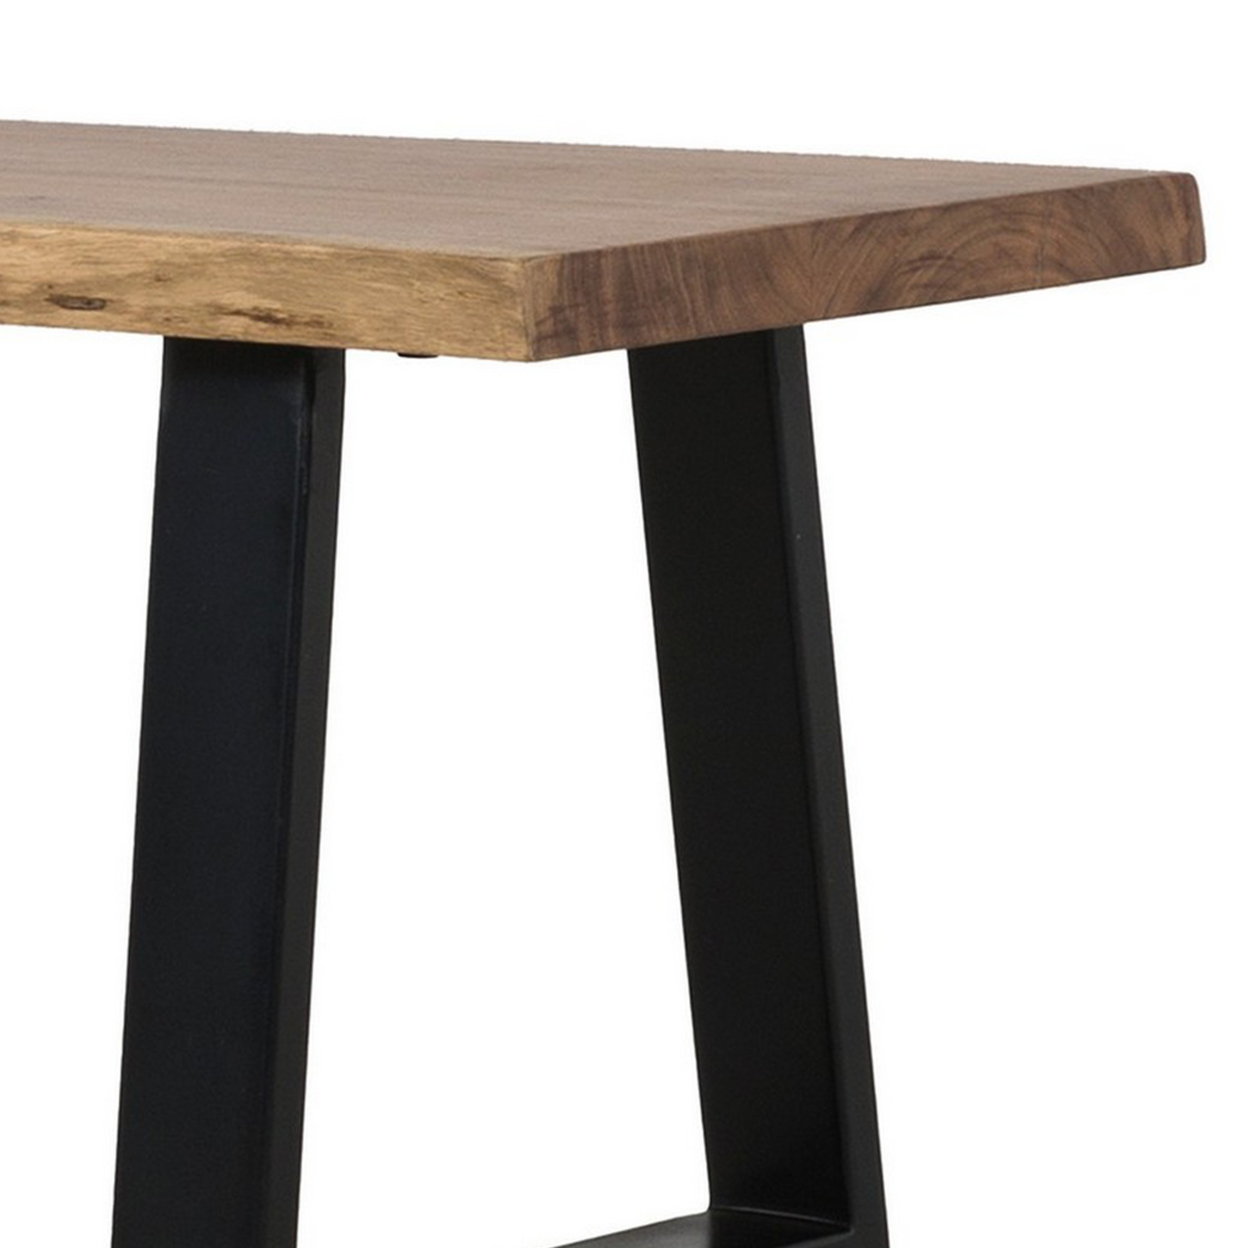 70 Inch Modern Dining Bench, Wood Seat Top And Trapezoidal Iron Legs, Black- Saltoro Sherpi